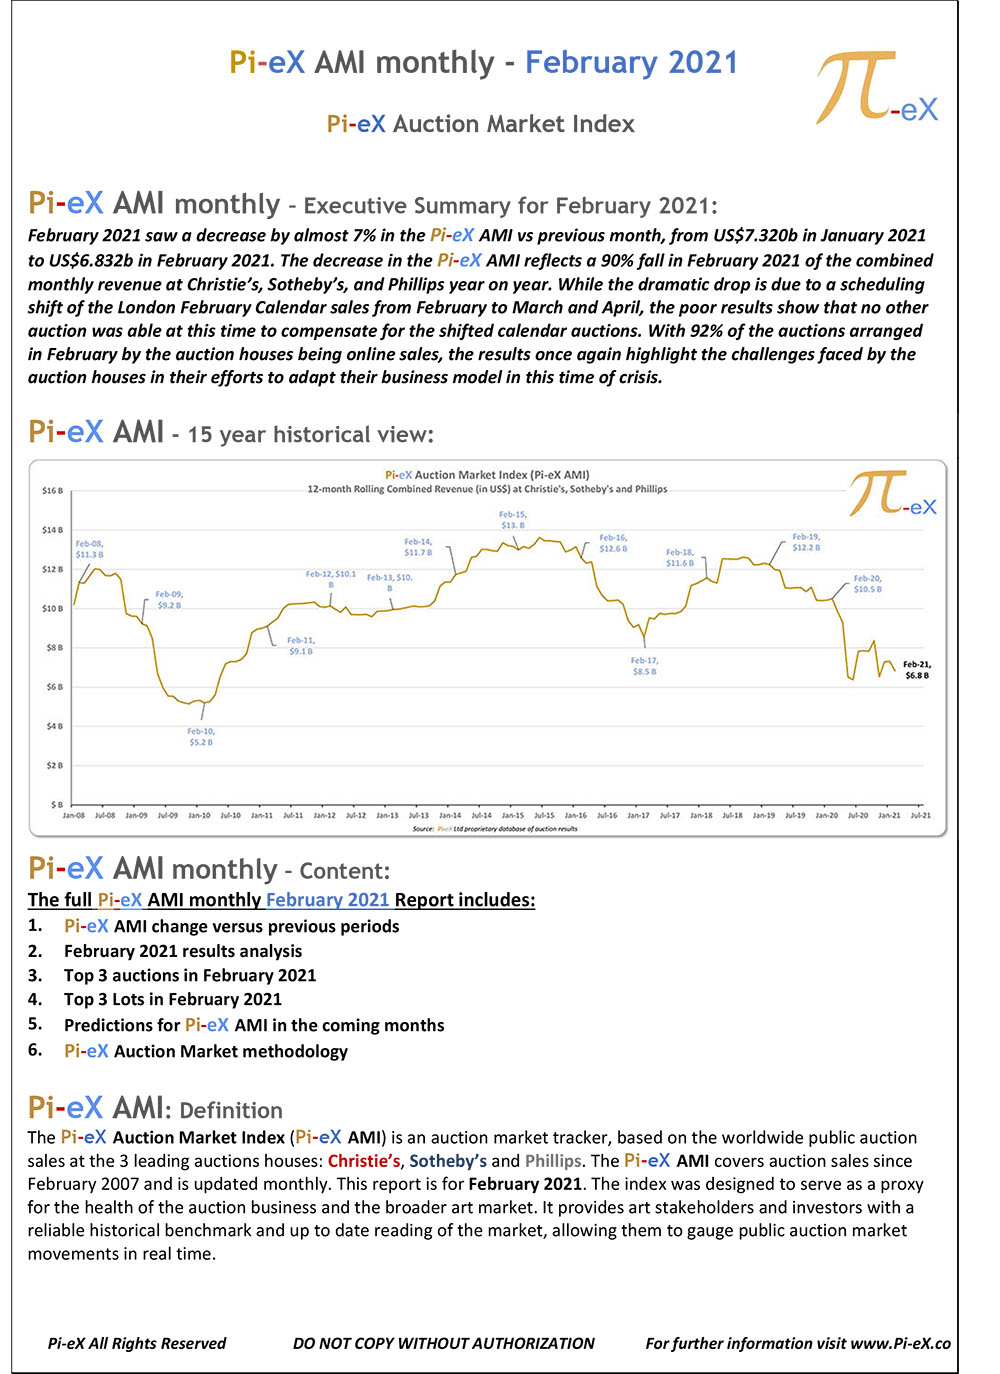 Pi-eX Auction Market Index - AMI February 2021 Report